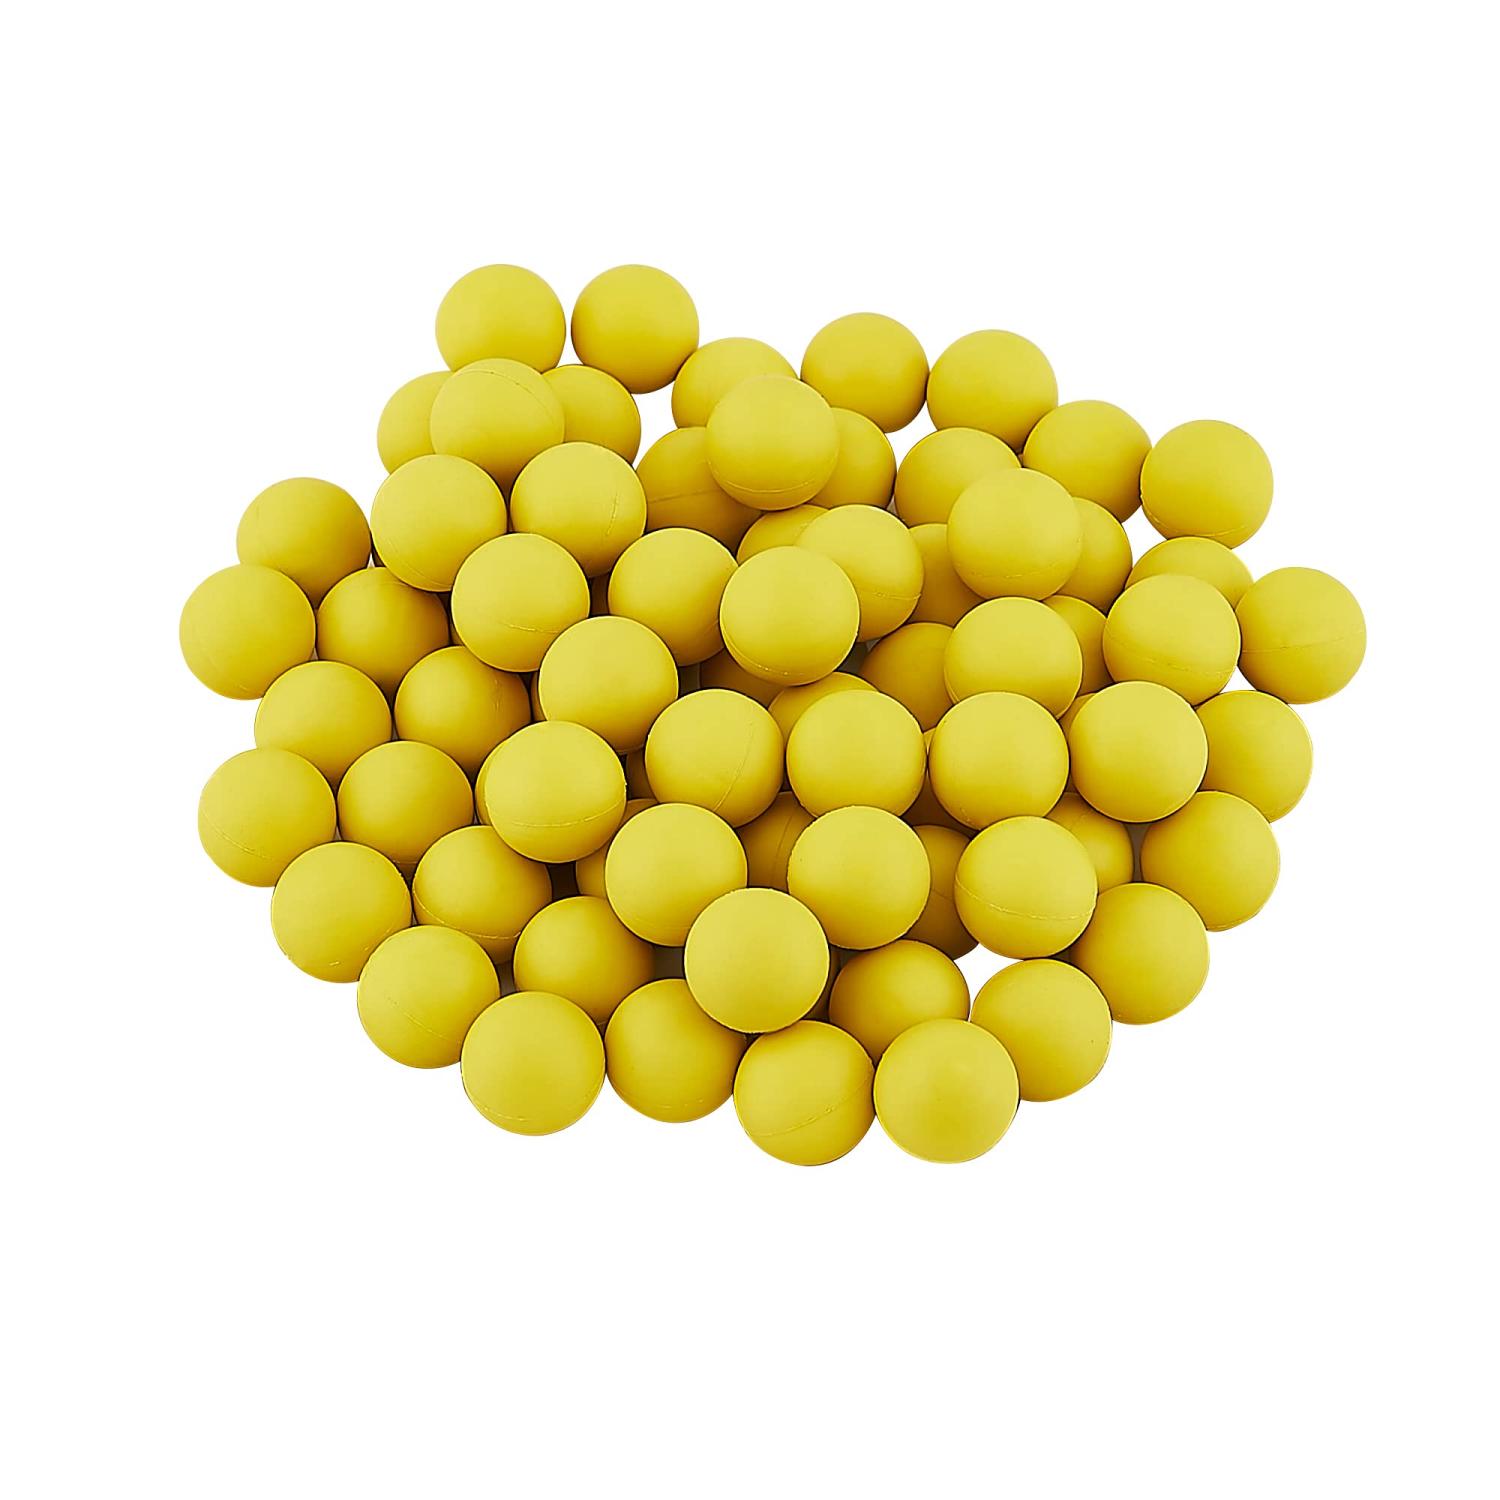 Reball 500 Reusable .68 Caliber Paintballs - Yellow — Pro Edge Paintball